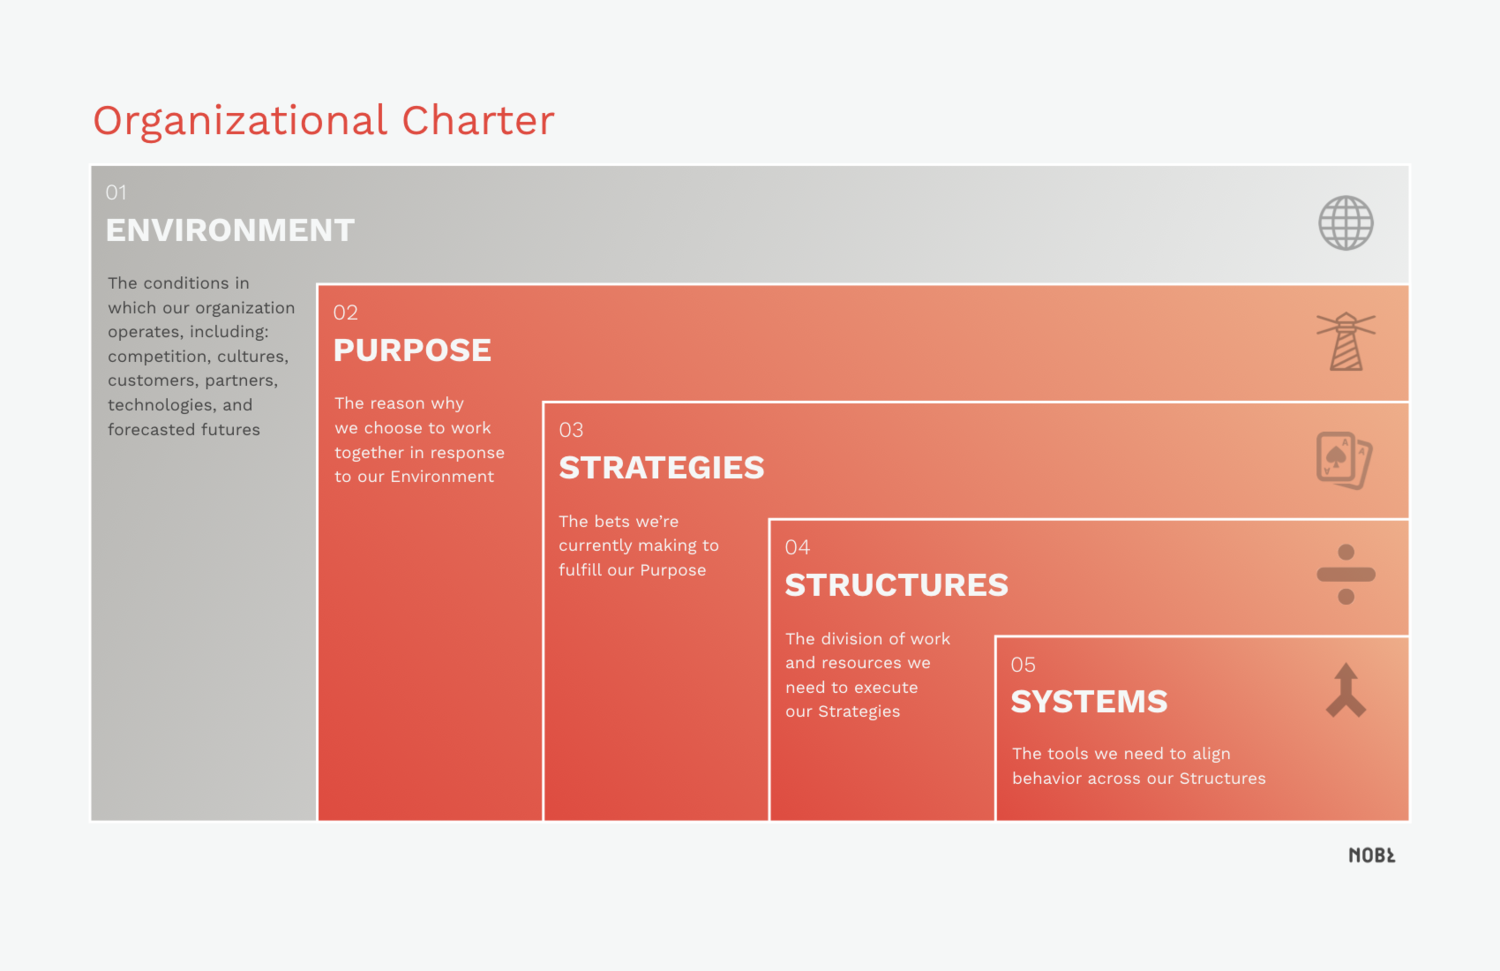 Organizational_Charter.png